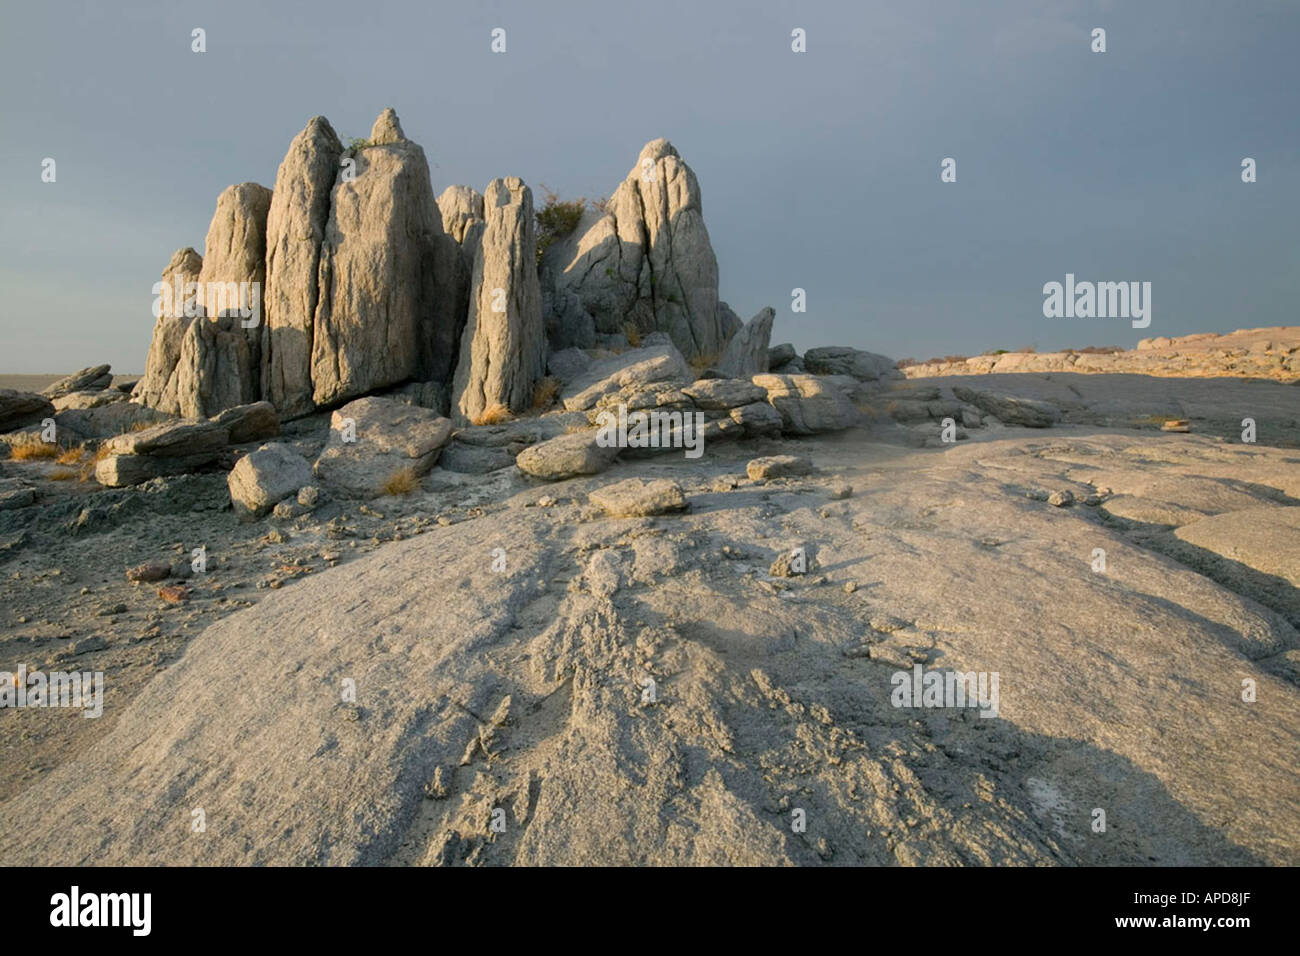 https://c8.alamy.com/comp/APD8JF/africa-botswana-morning-sun-lights-pointed-rocks-at-kubu-island-on-APD8JF.jpg